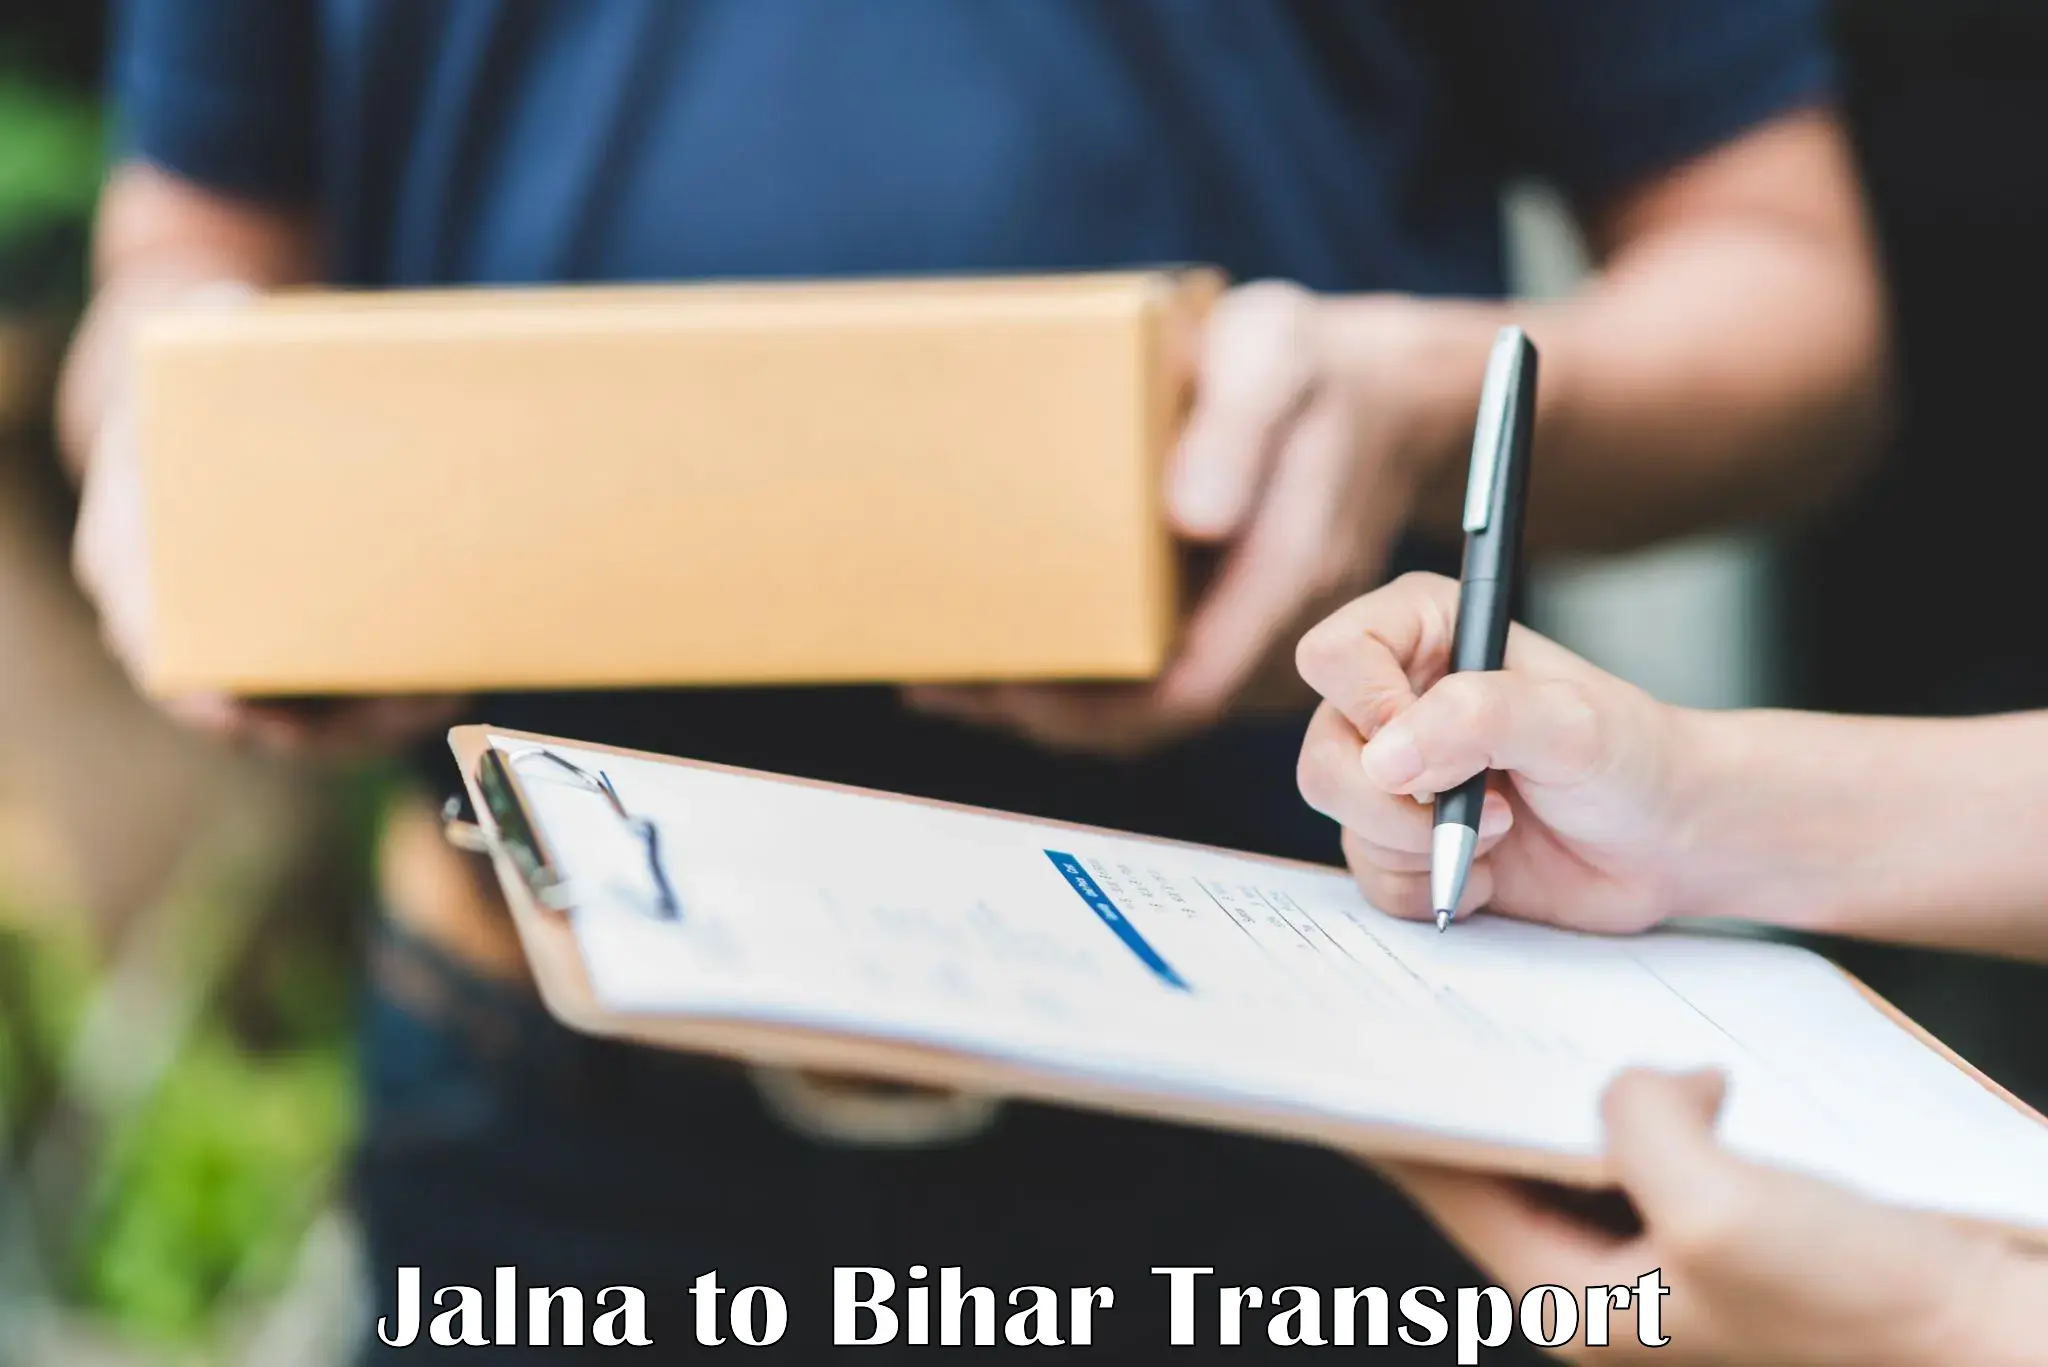 Sending bike to another city Jalna to Dhaka